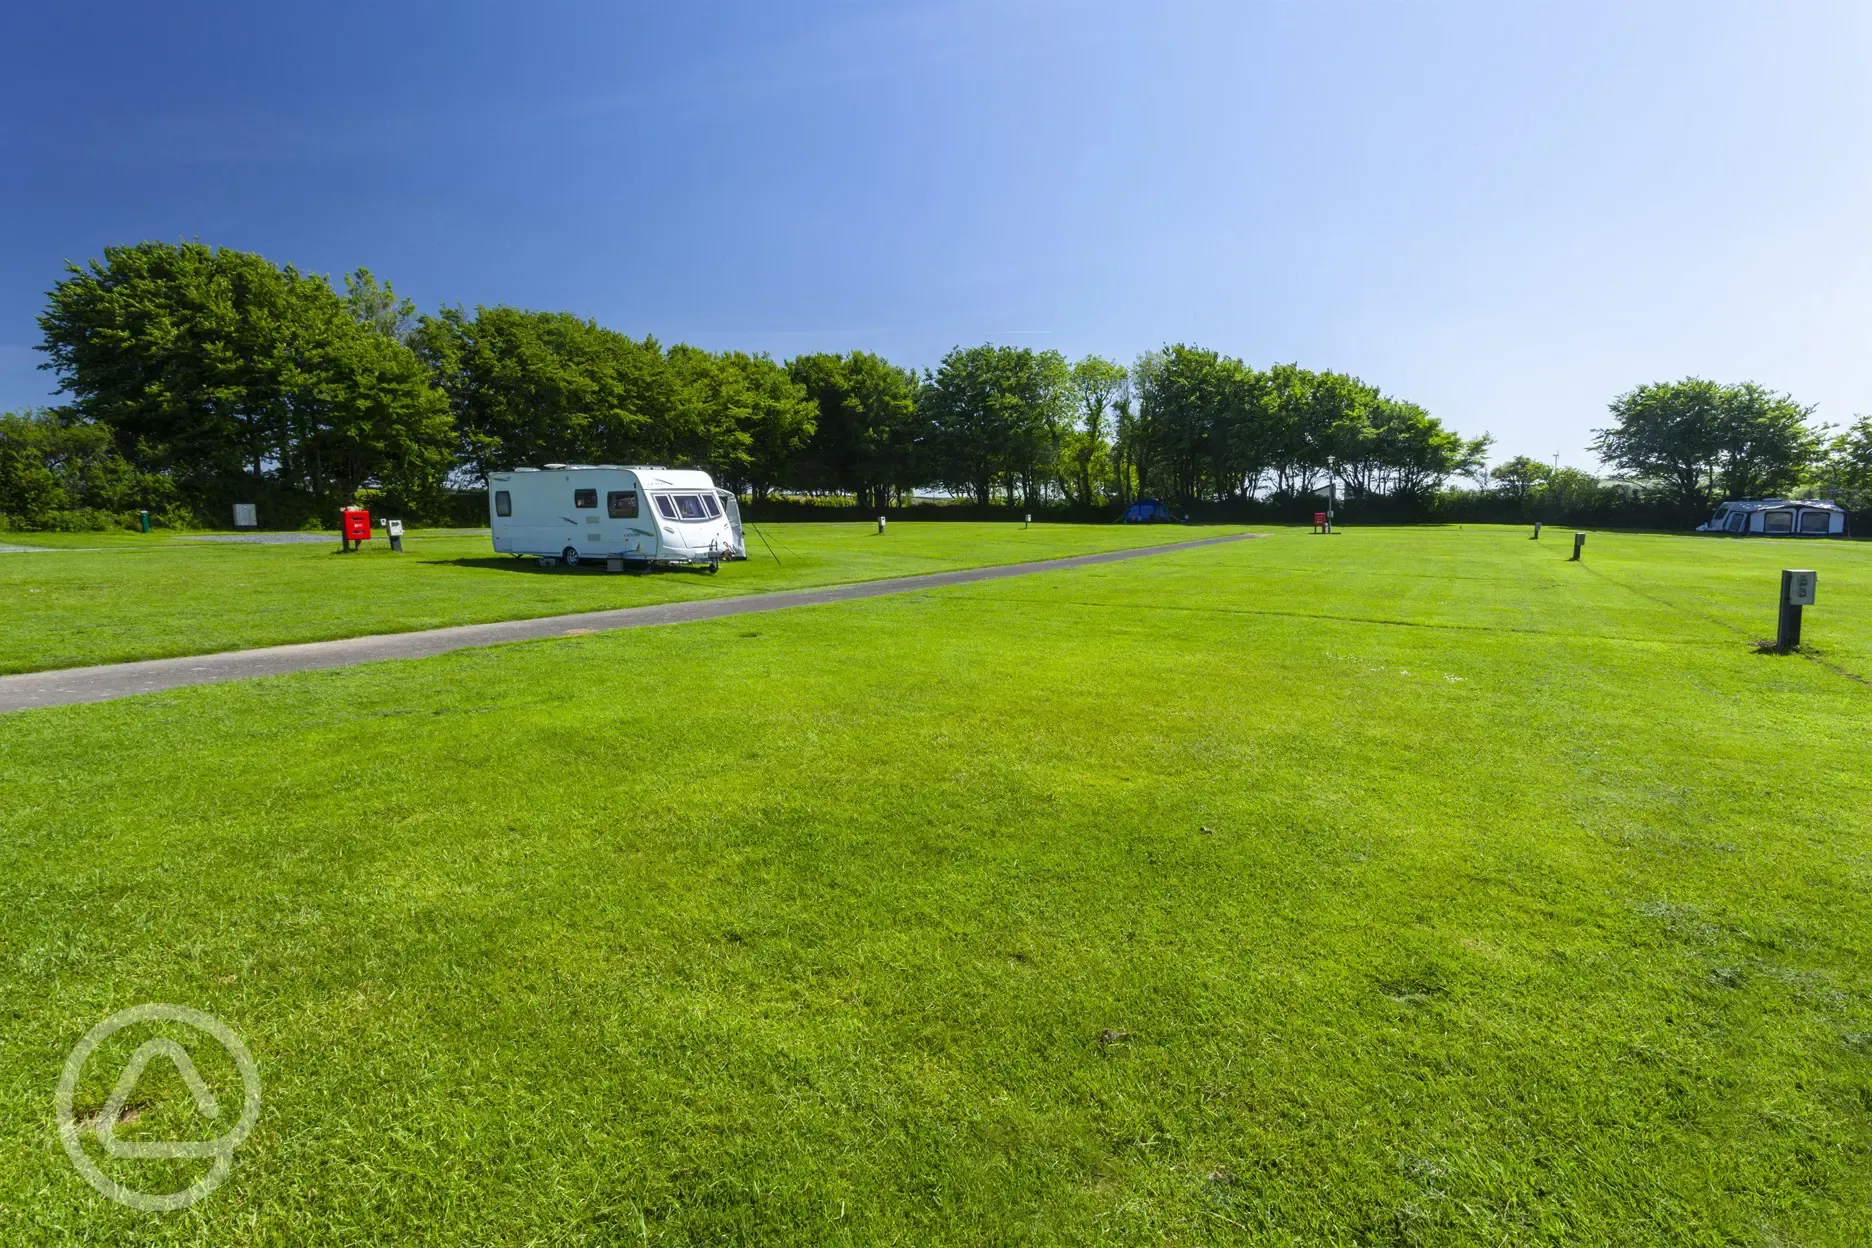 Electric grass caravan pitches